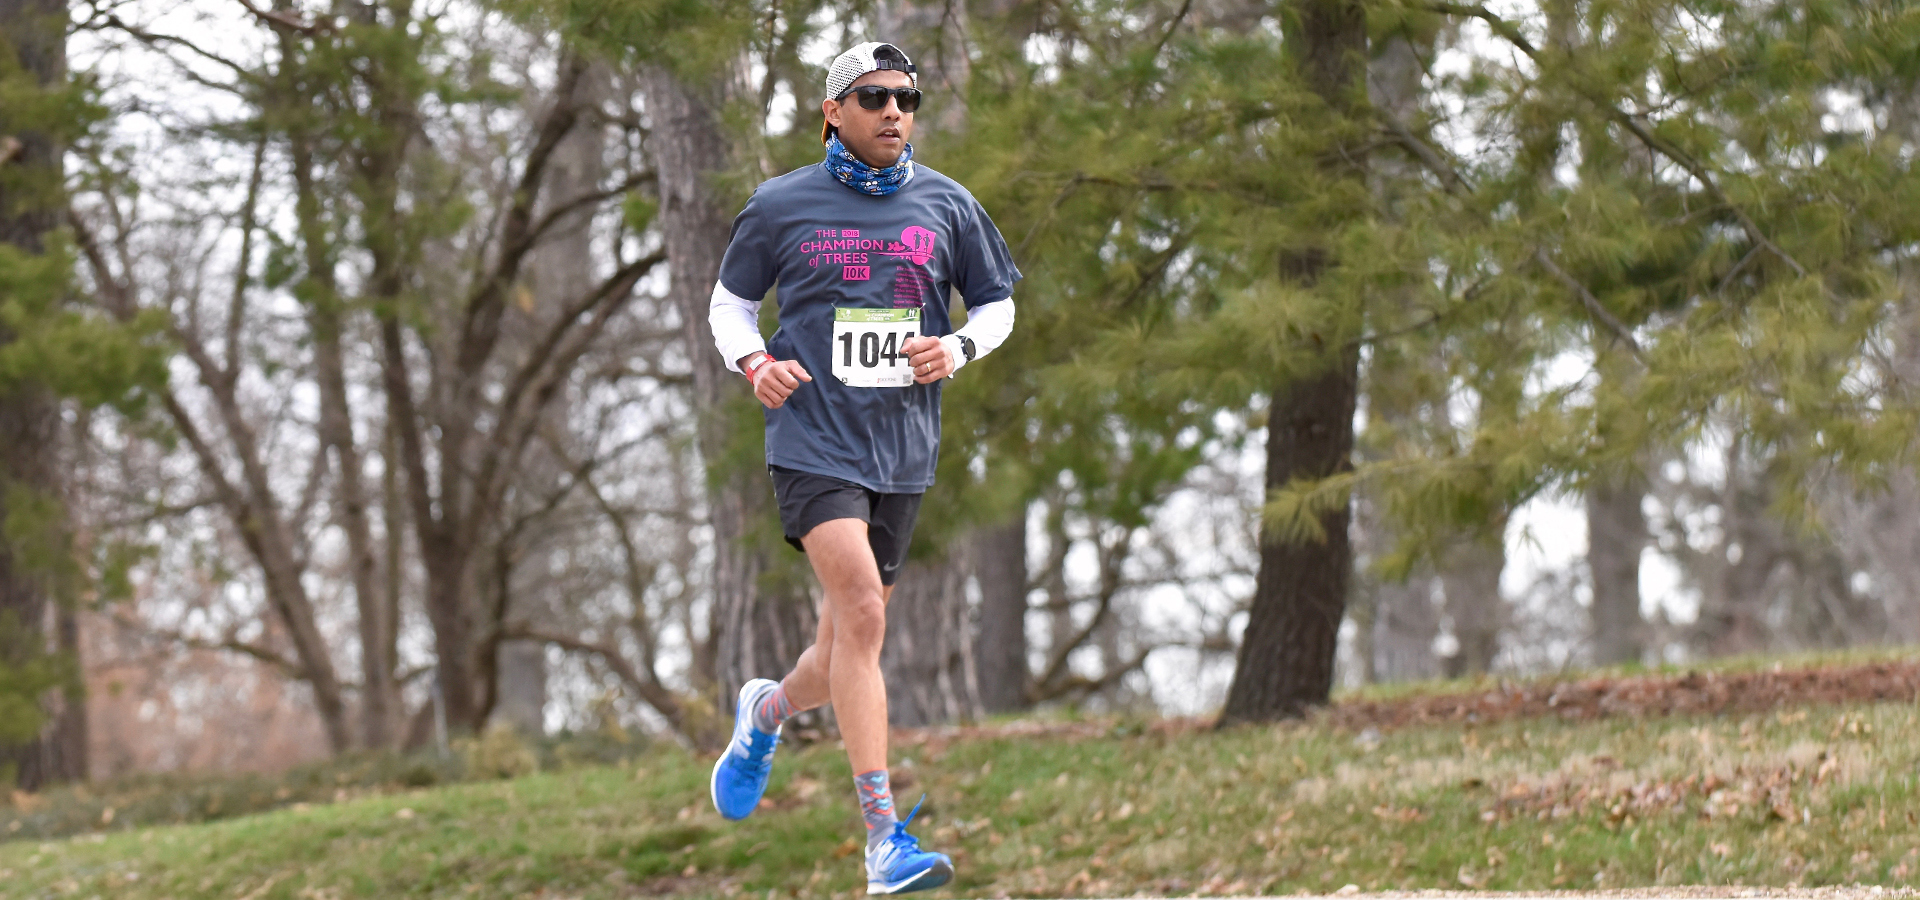 Runner runs the champion of trees 10K in spring